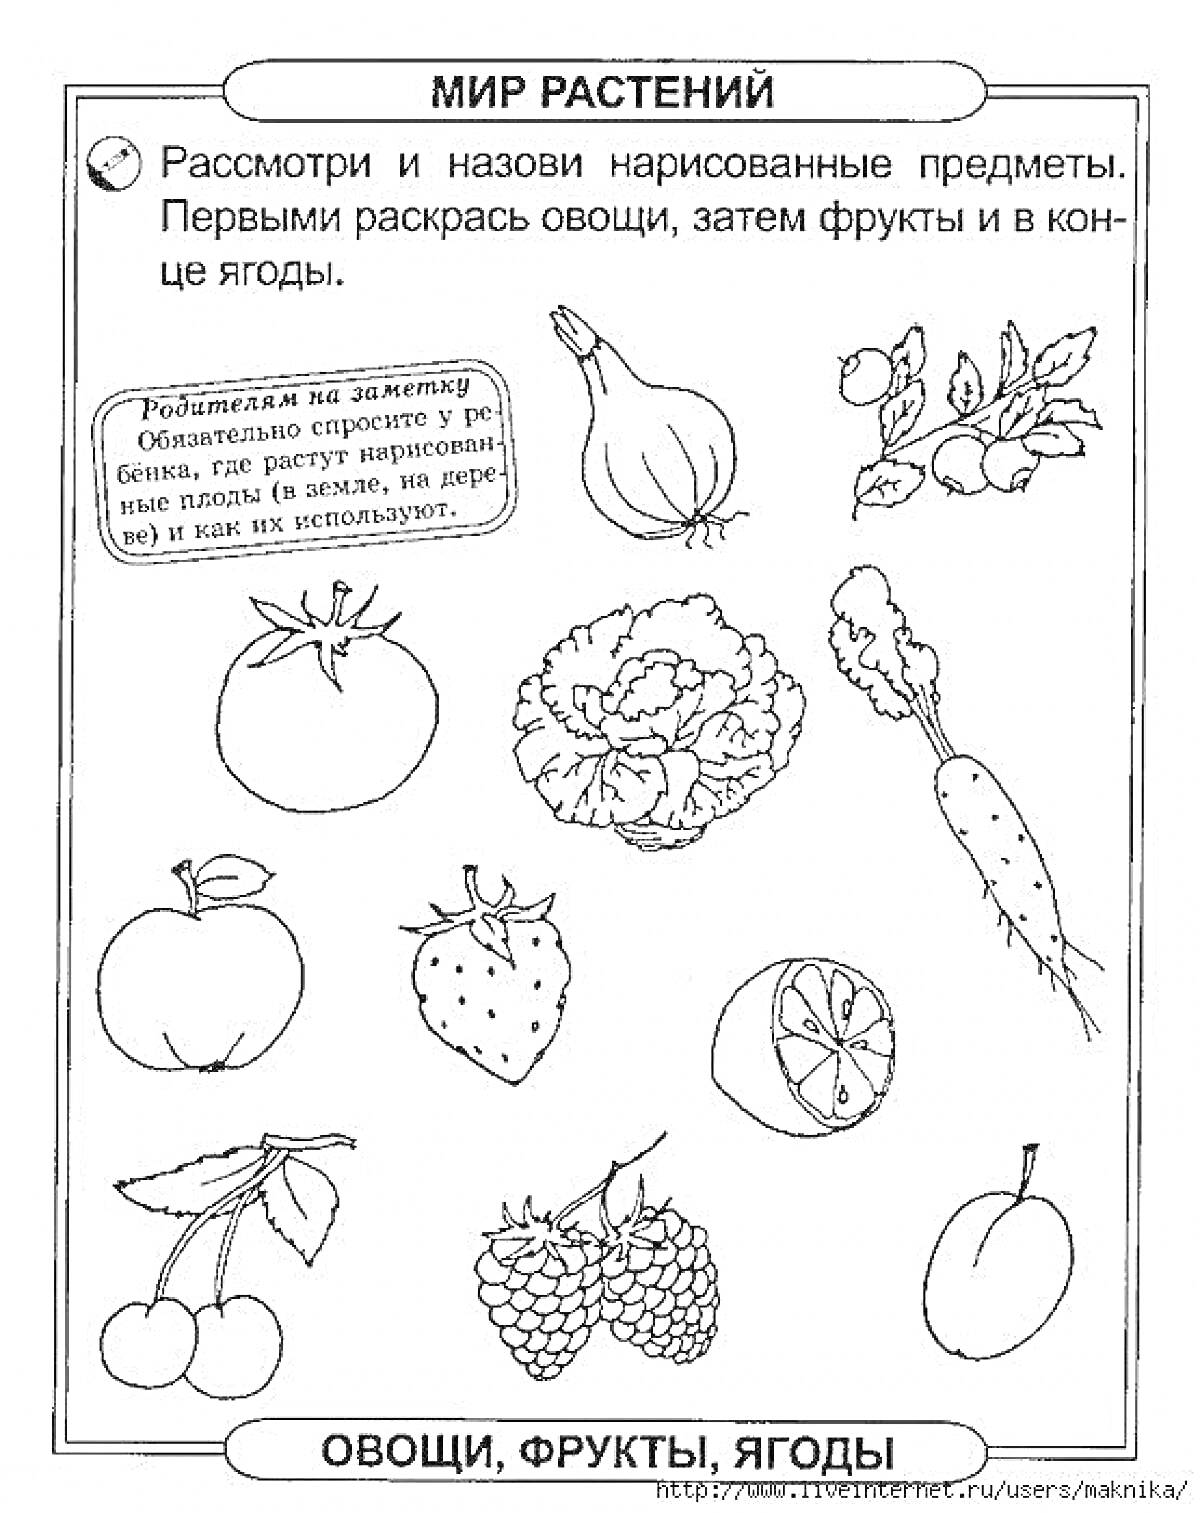 Раскраска Мир растений: помидор, лук, виноград, груша, яблоко, клубника, лимон, морковь, вишня, малина